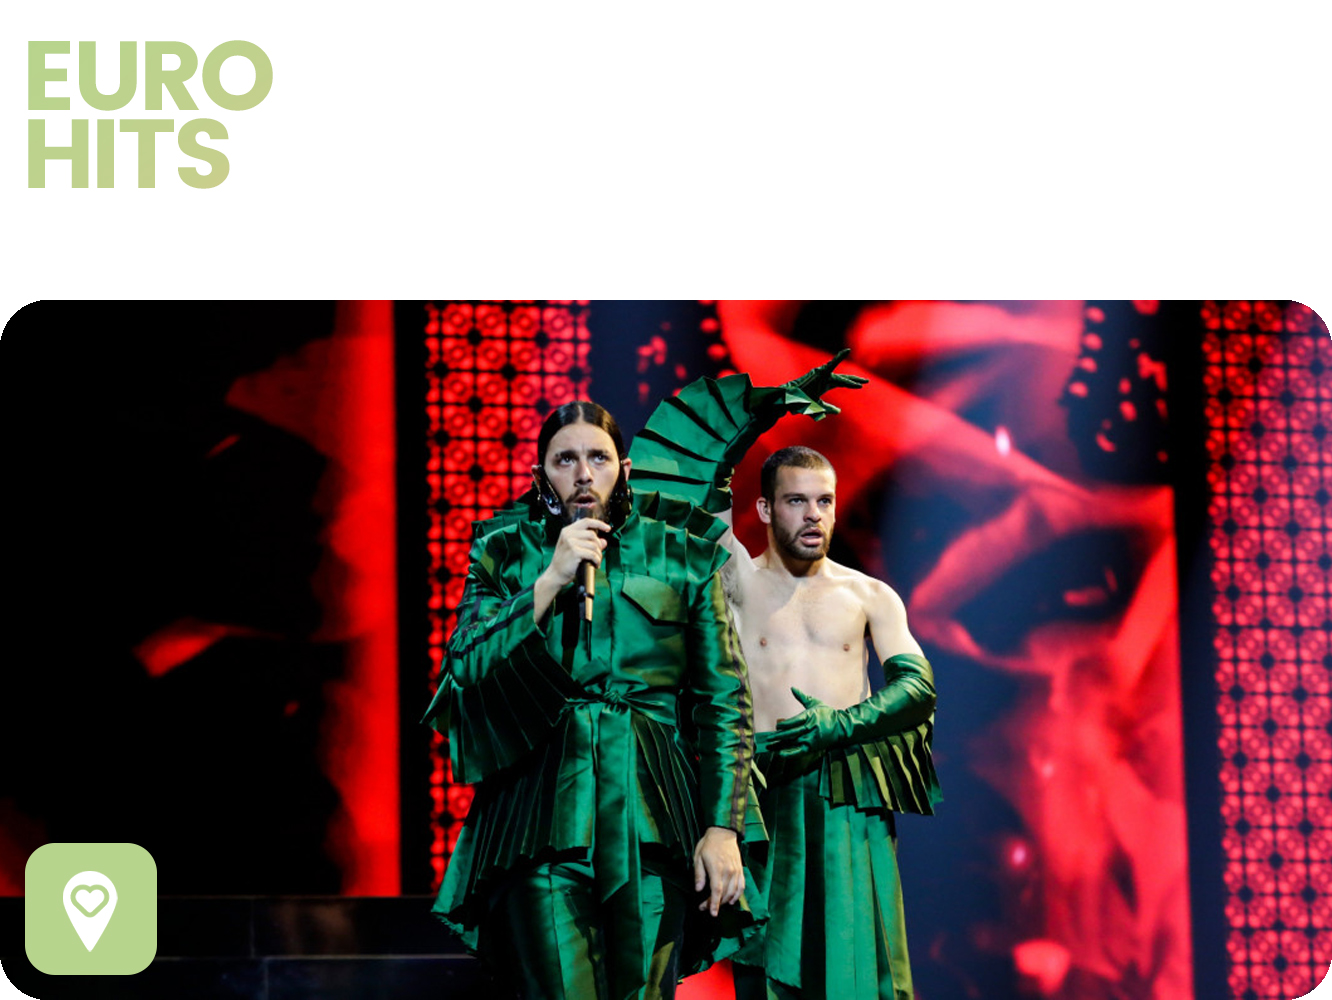 ‘Telemóveis’, la Portugal conceptual e intensa de Conan Osiris que tropezó en la semifinal